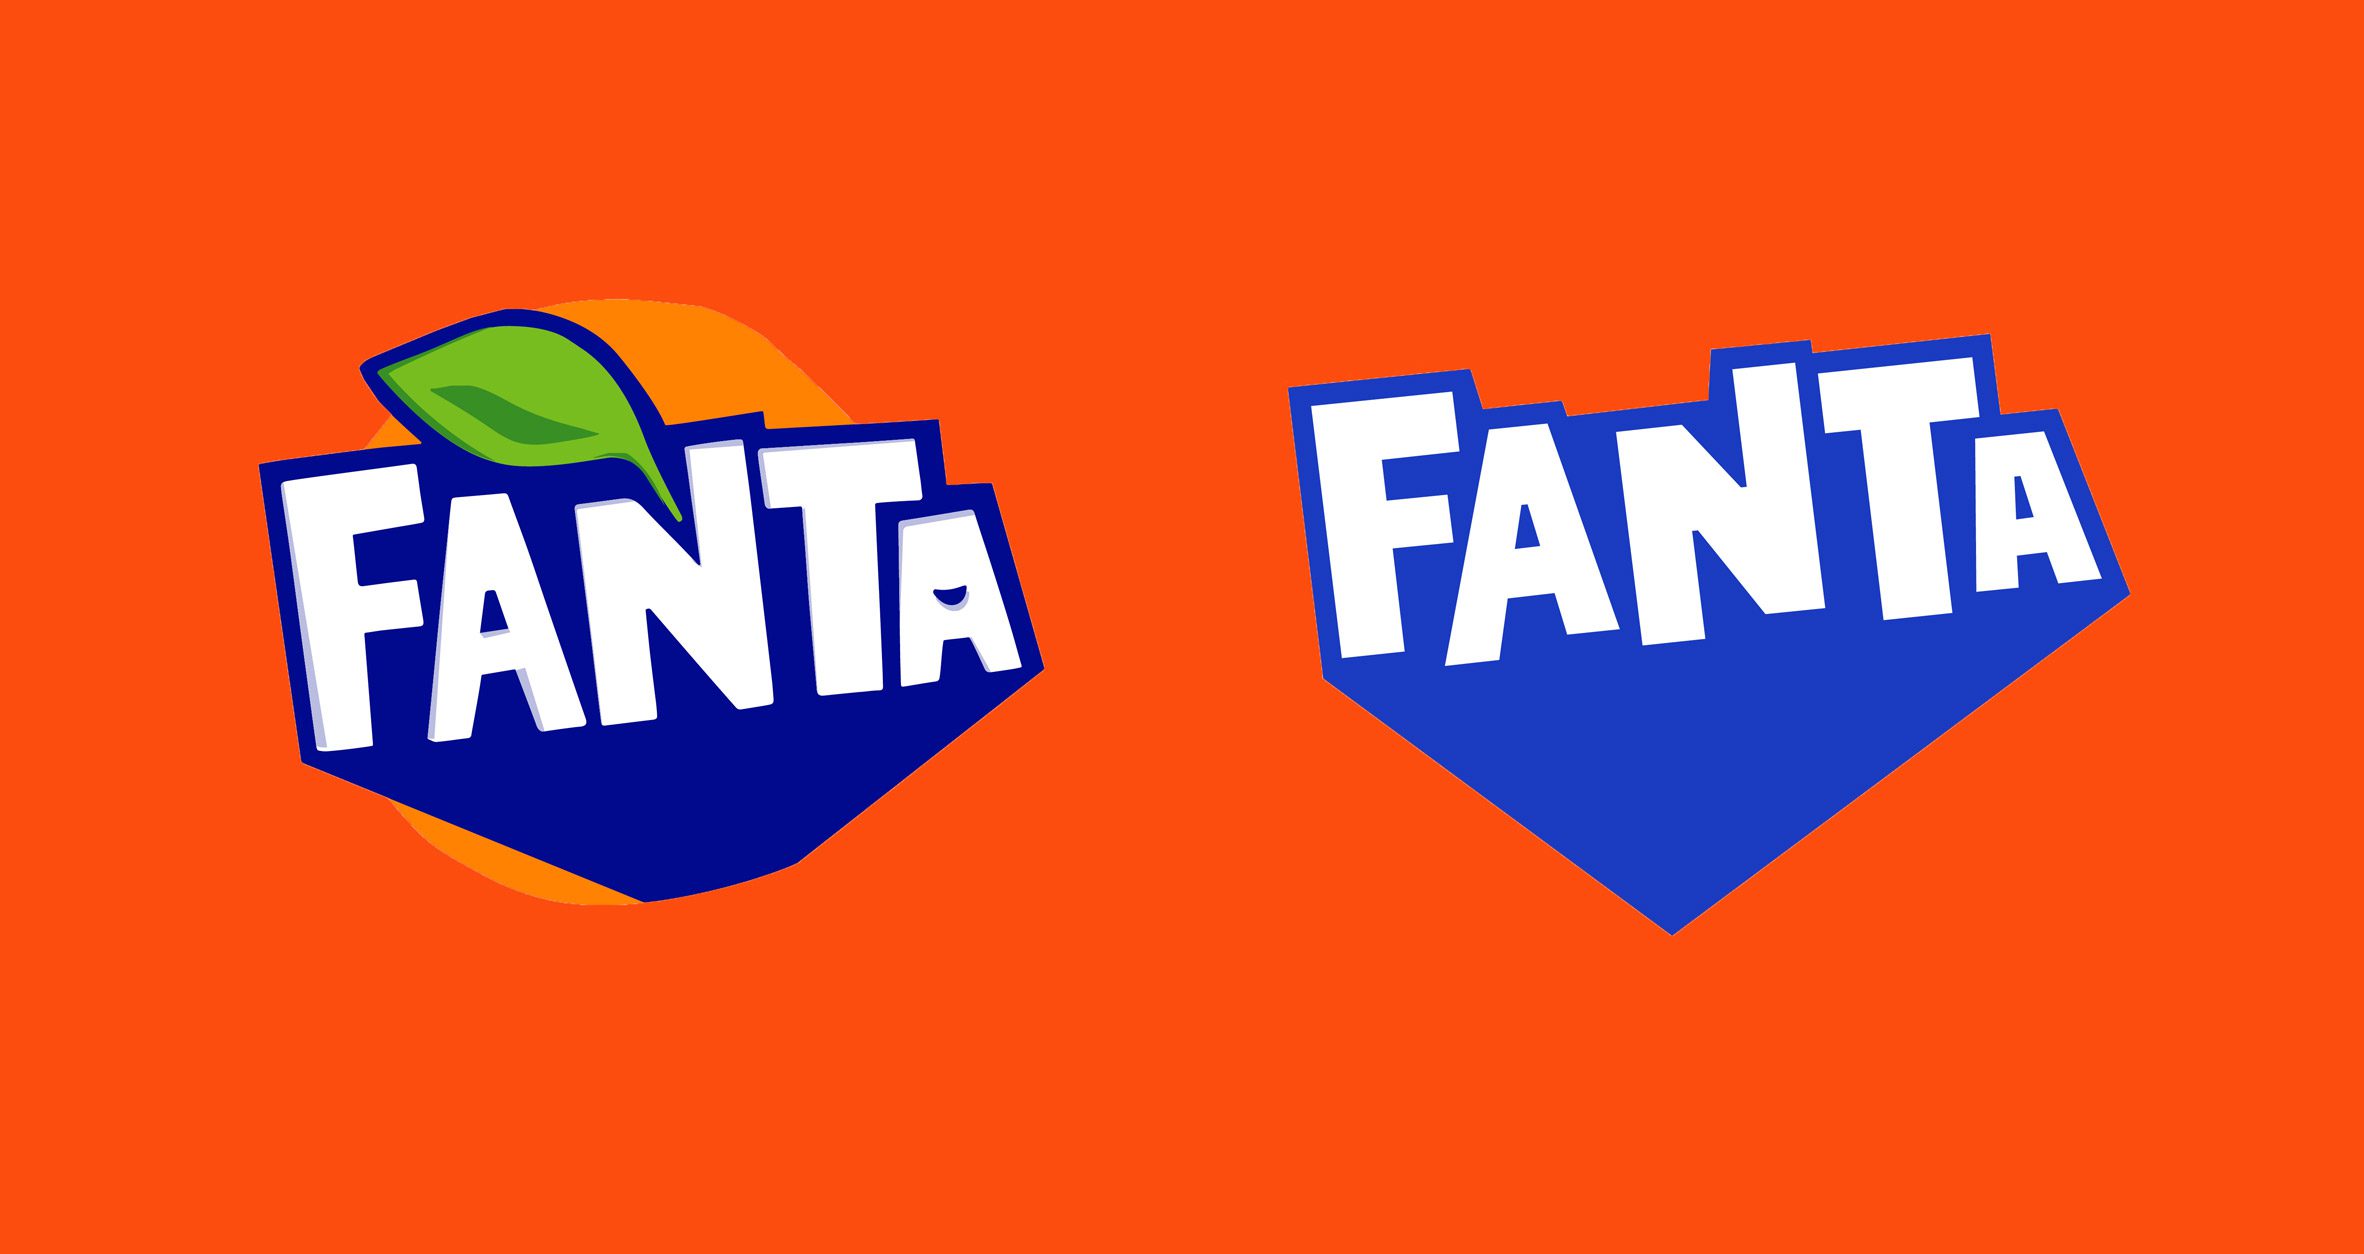 Fanta's old and new logos